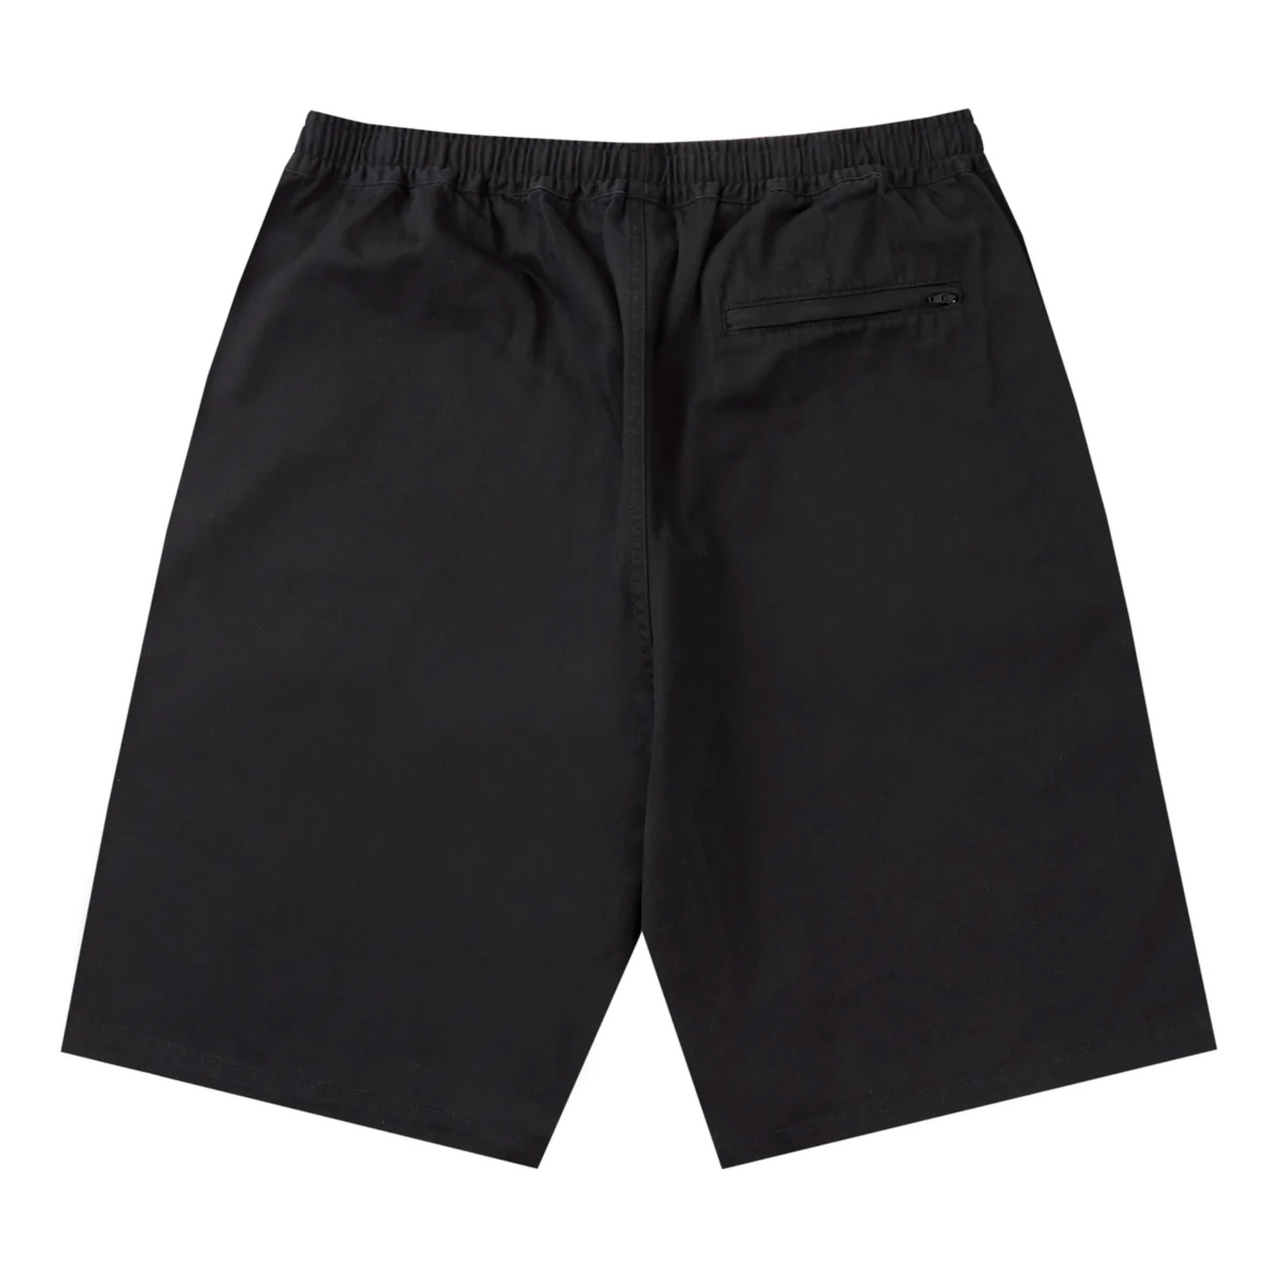 Alltimers Yacht Rental Shorts - Black